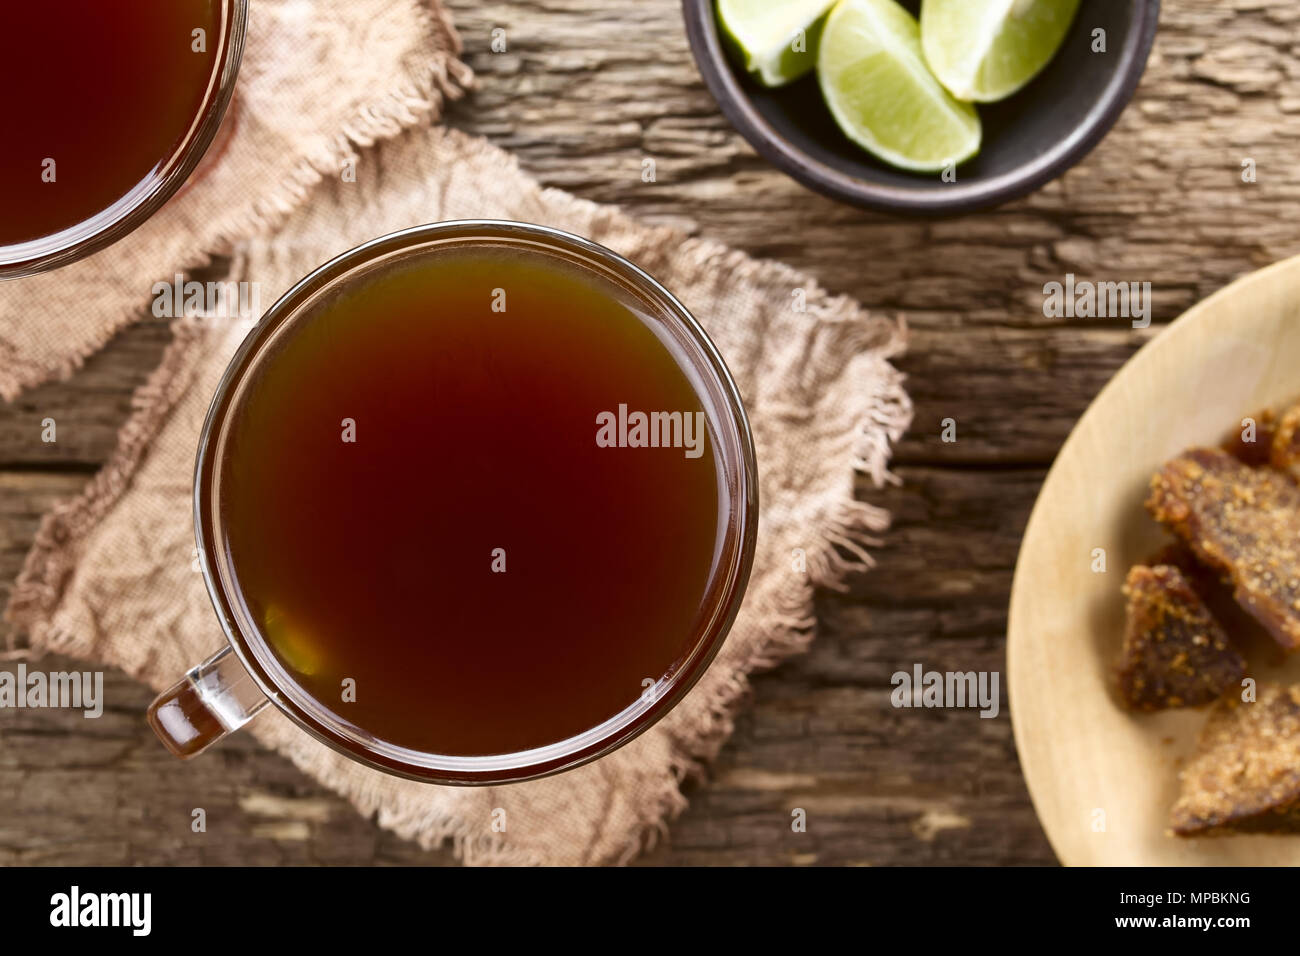 Fresh homemade Aguapanela, Agua de Panela or Aguadulce, a popular Latin American sweet drink made of panela unrefined whole cane sugar boiled in water Stock Photo